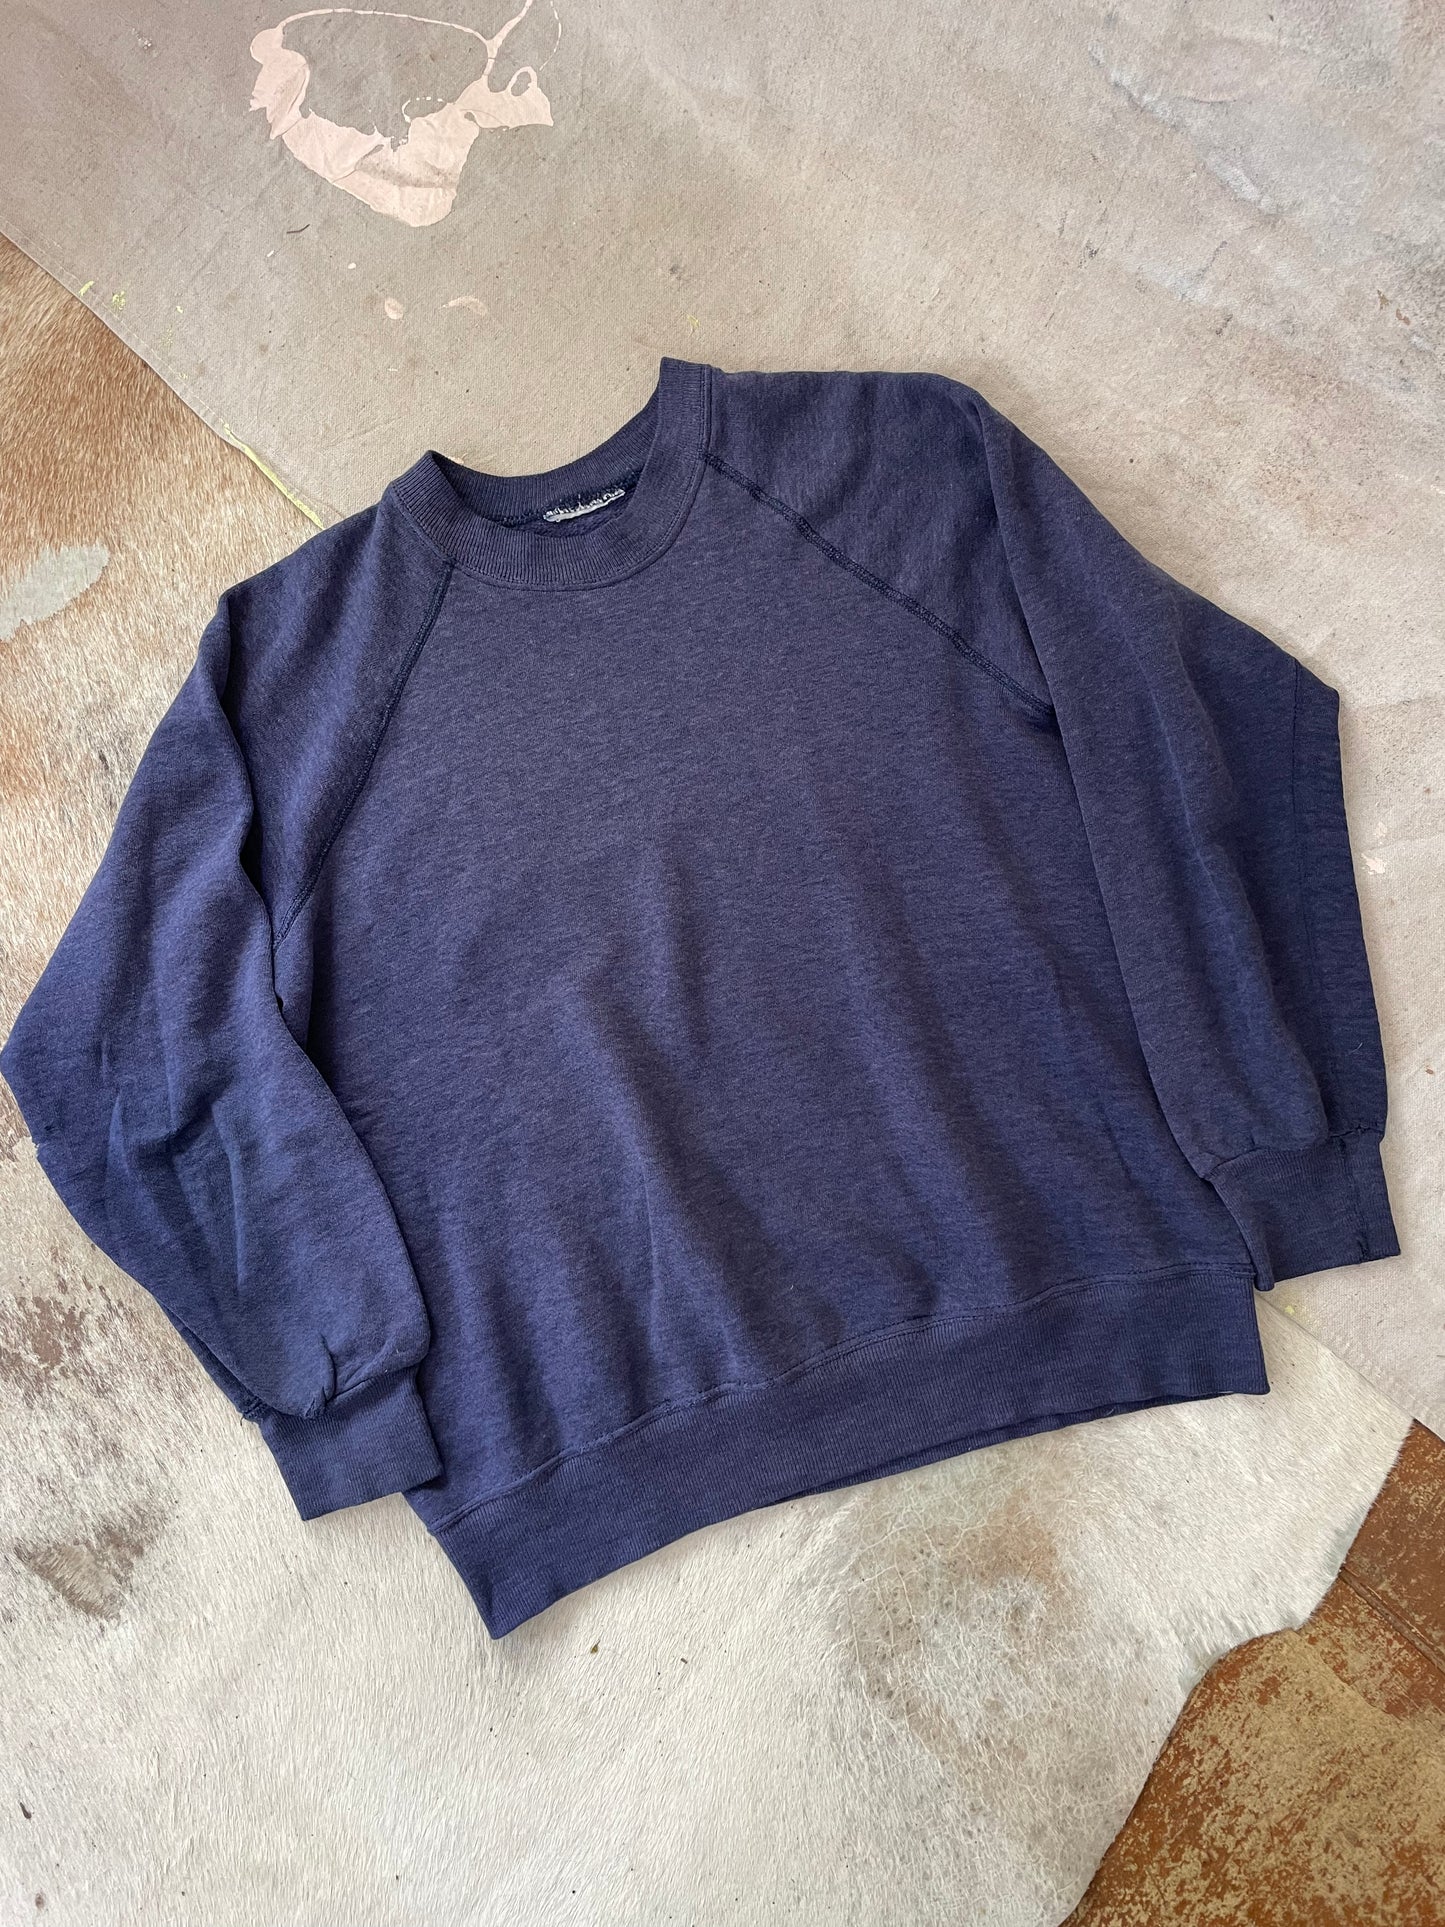 80s/90s Distressed Midnight Blue Sweatshirt